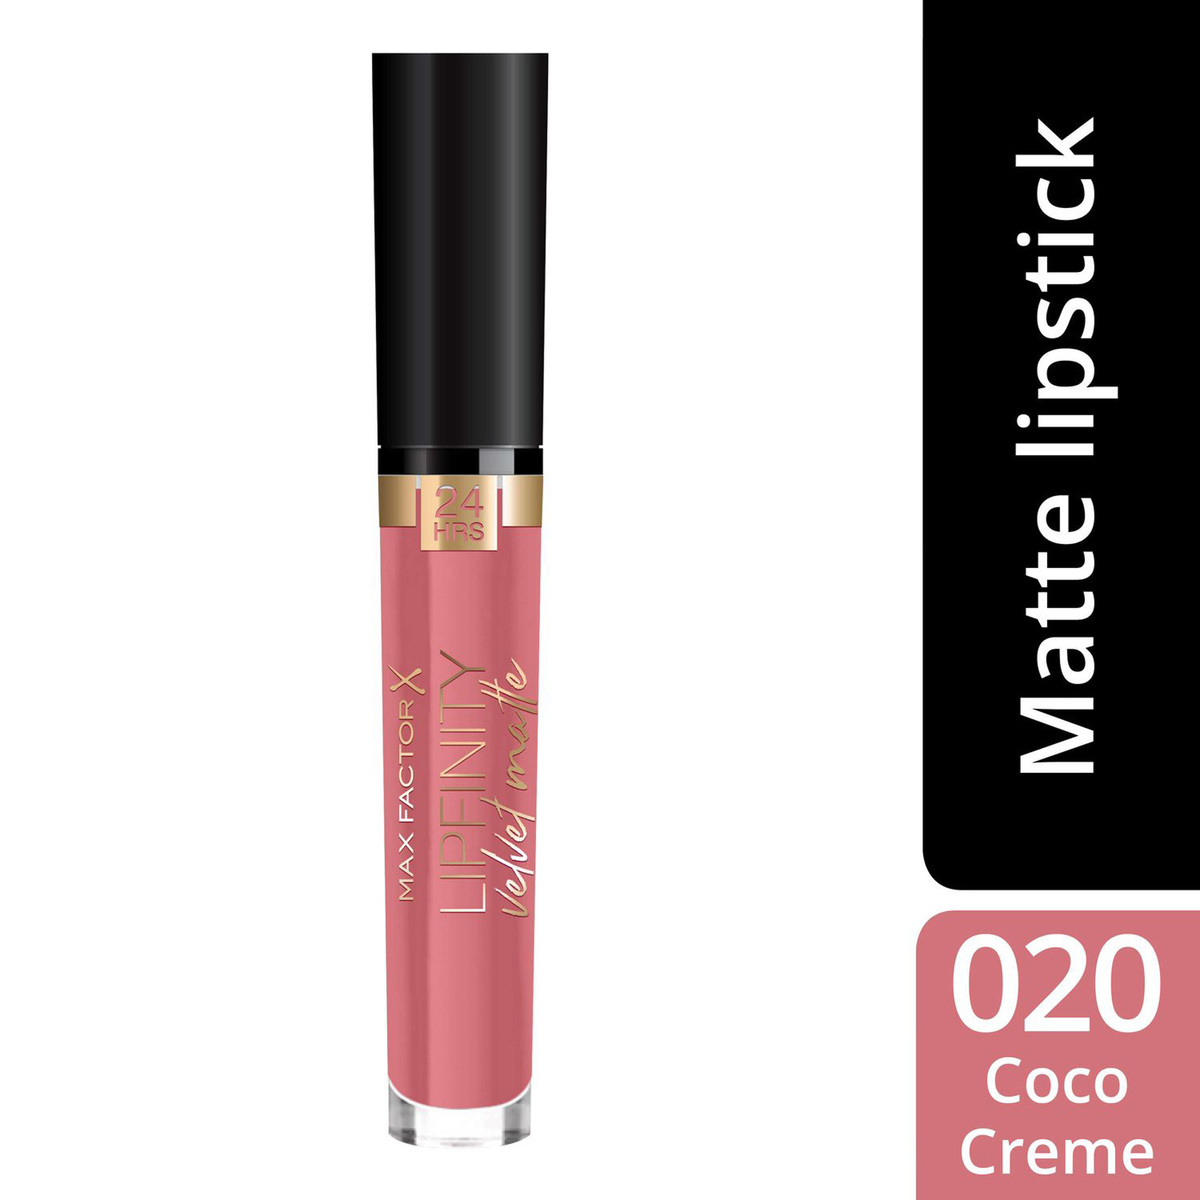 Max Factor Lipfinity Velvet Matte Liquid Lipstick, 020 Coco Creme, 3.5 ml